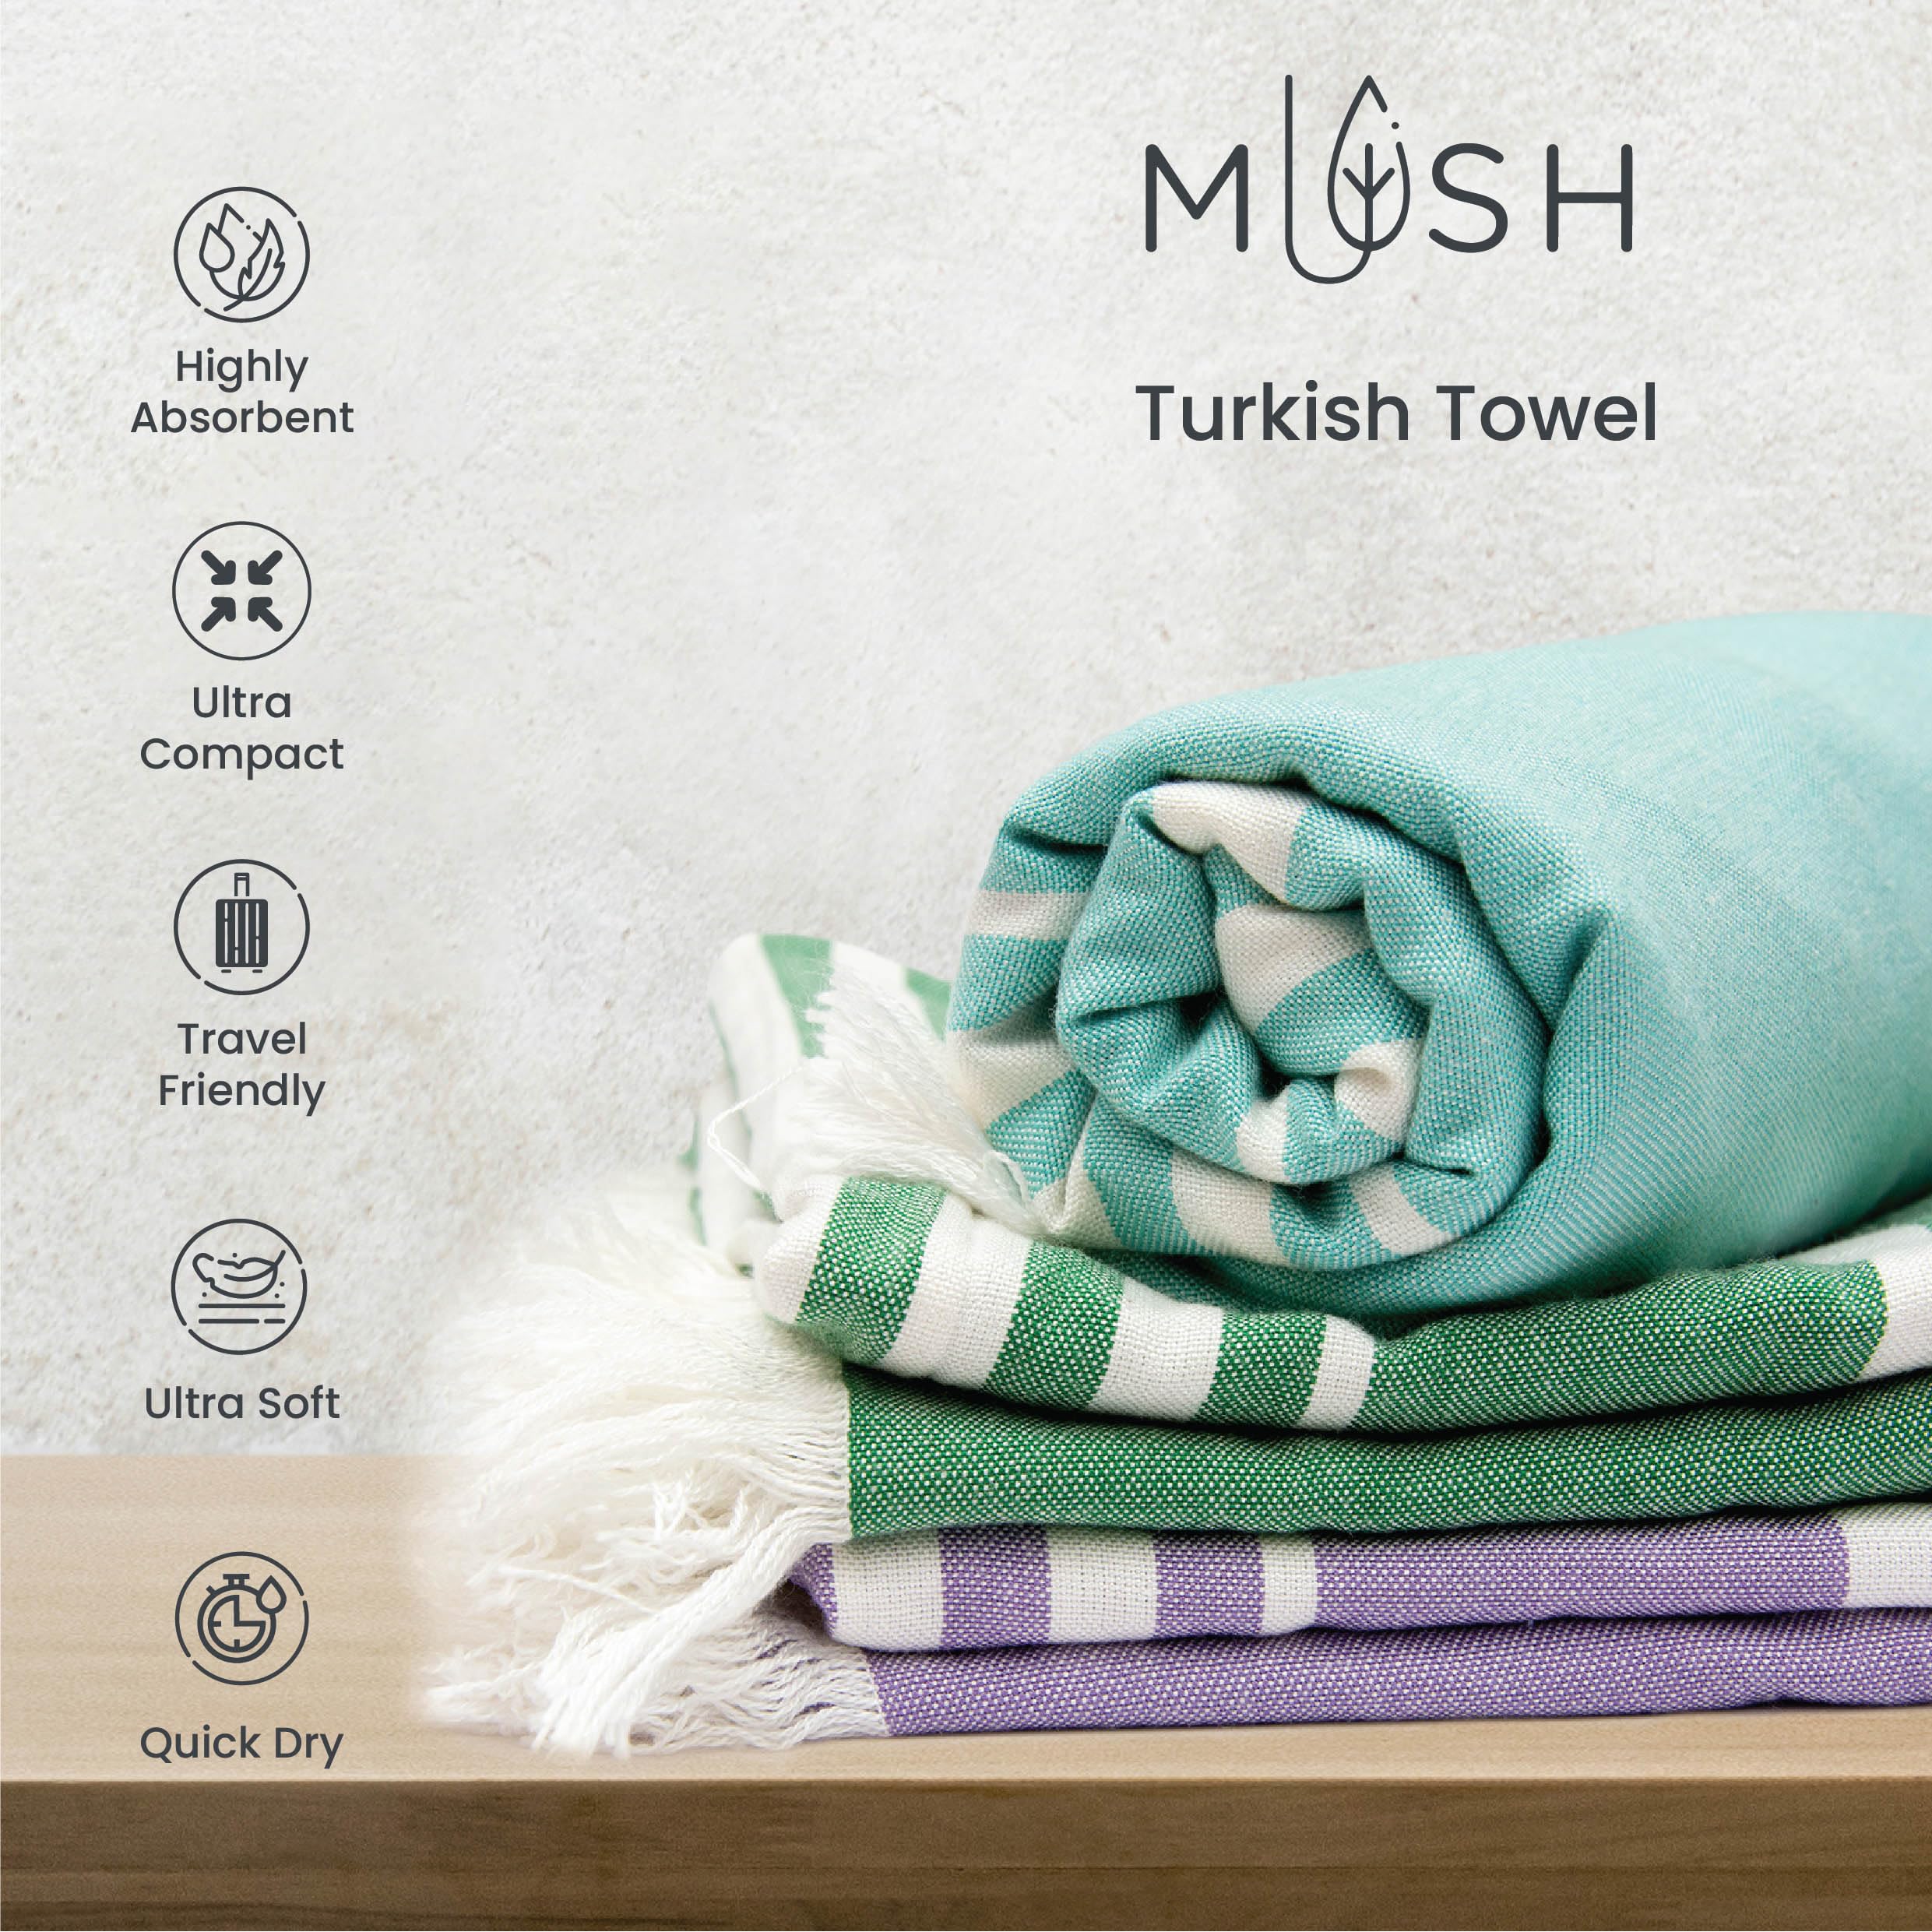 Mush Bamboo Turkish Towel Set: Perfect Diwali, Wedding, Housewarming, Anniversary Gifts for Women, Men, Couples. Soft, Absorbent, Compact, Quick Dry Towel for Bath, Travel, Gym, Beach, Pool, Yoga (Gift Box : 2 Blue - Light Green)